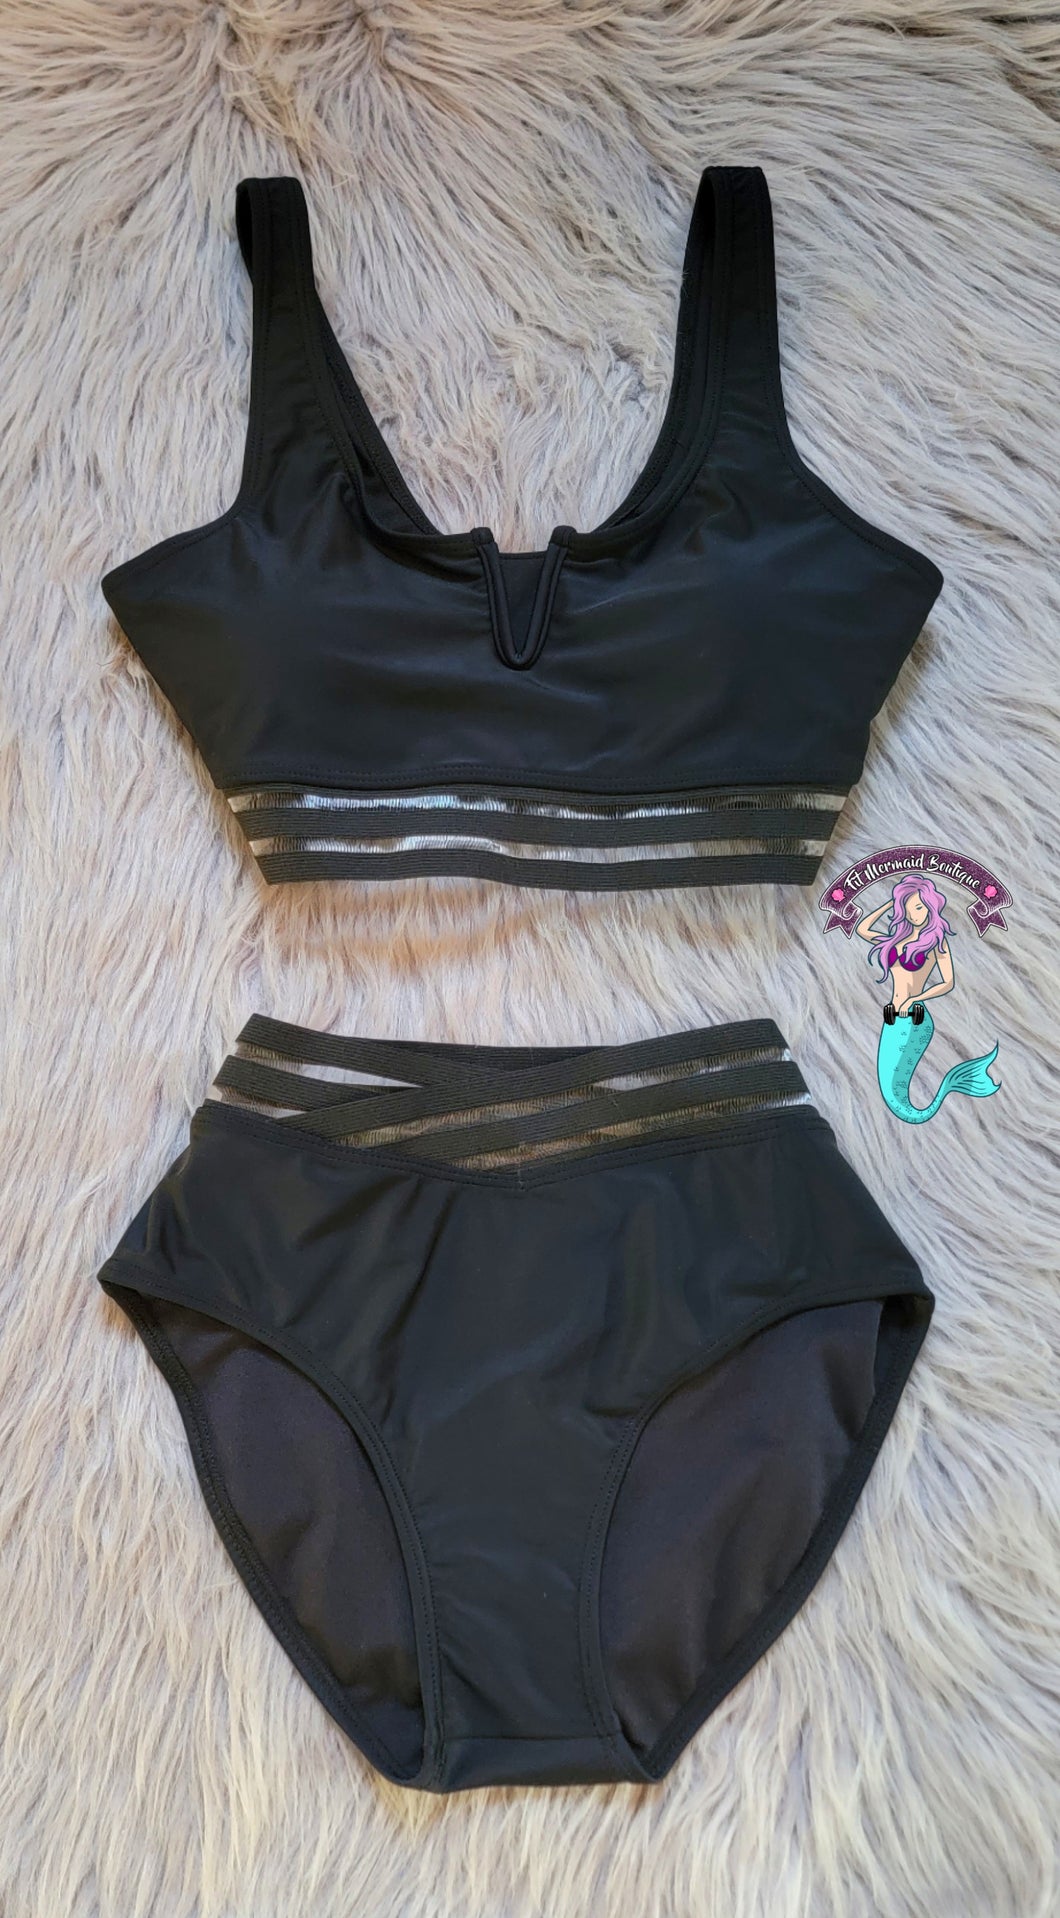 Black Mermaid bikini